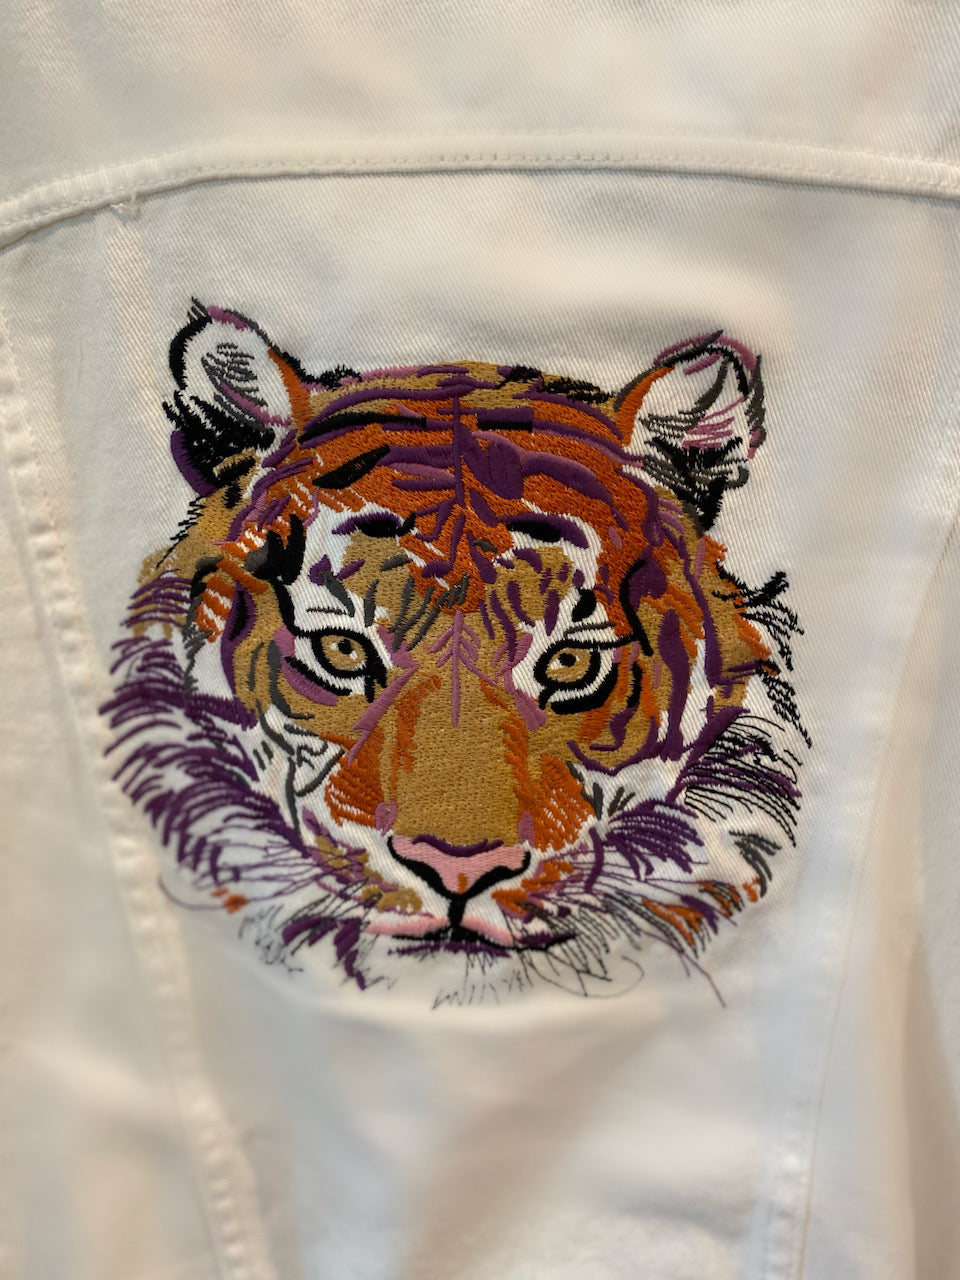 Tiger Art Denim Jacket